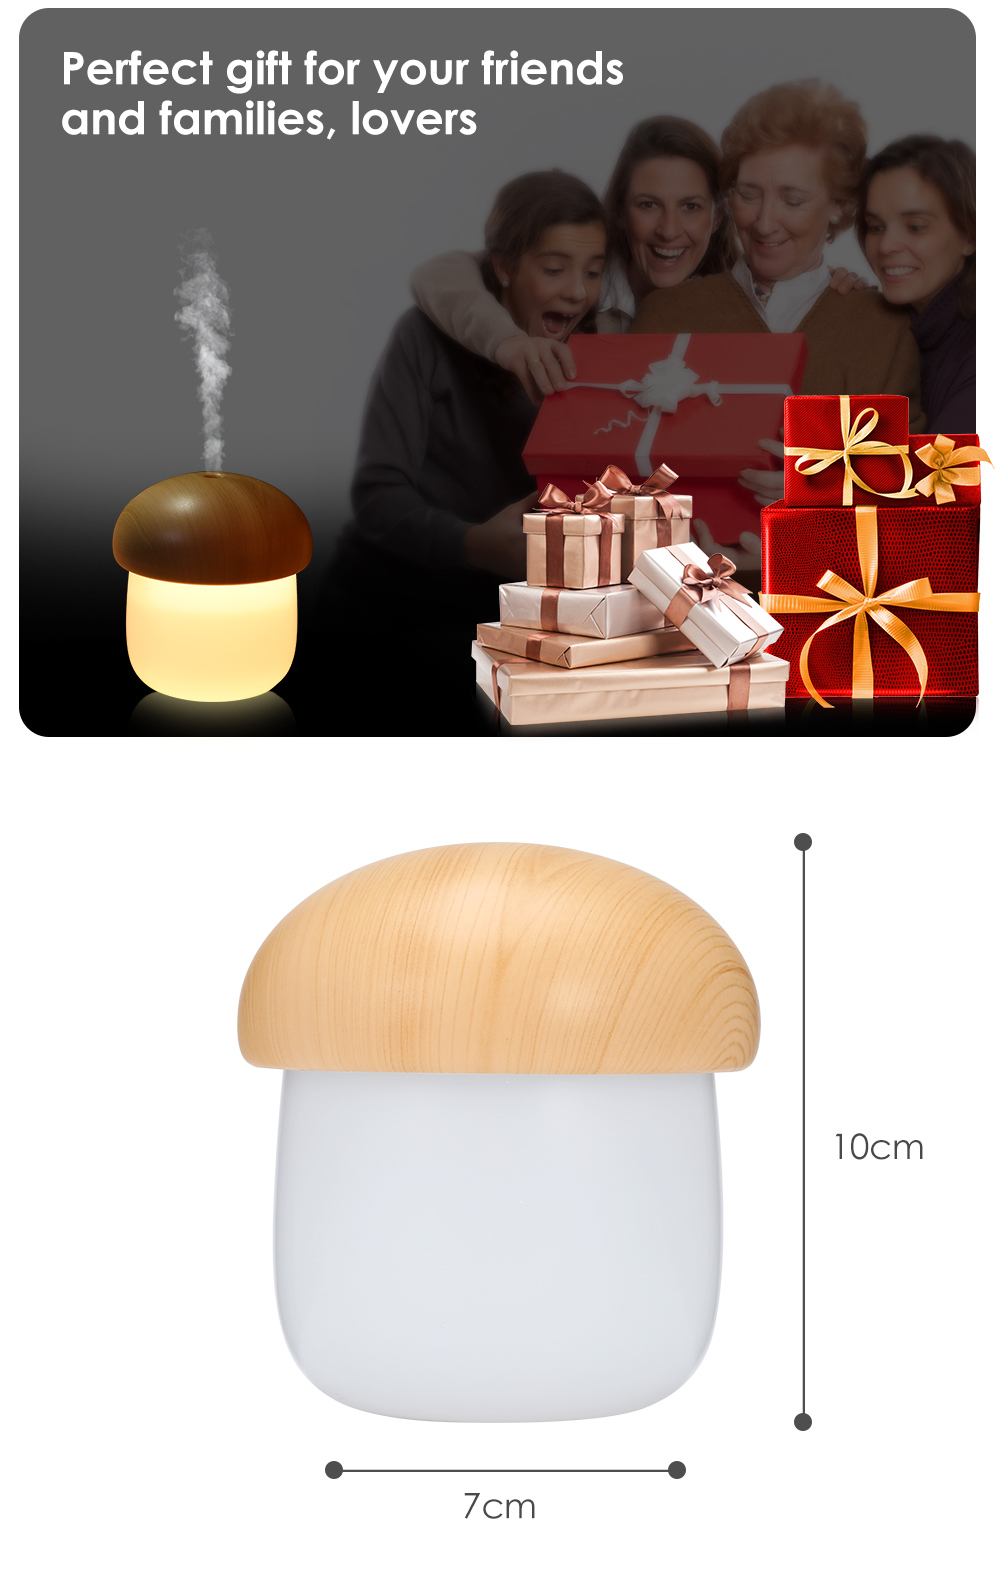 USB Humidifier Desk Personal Air Mushroom Diffuser with Night Light